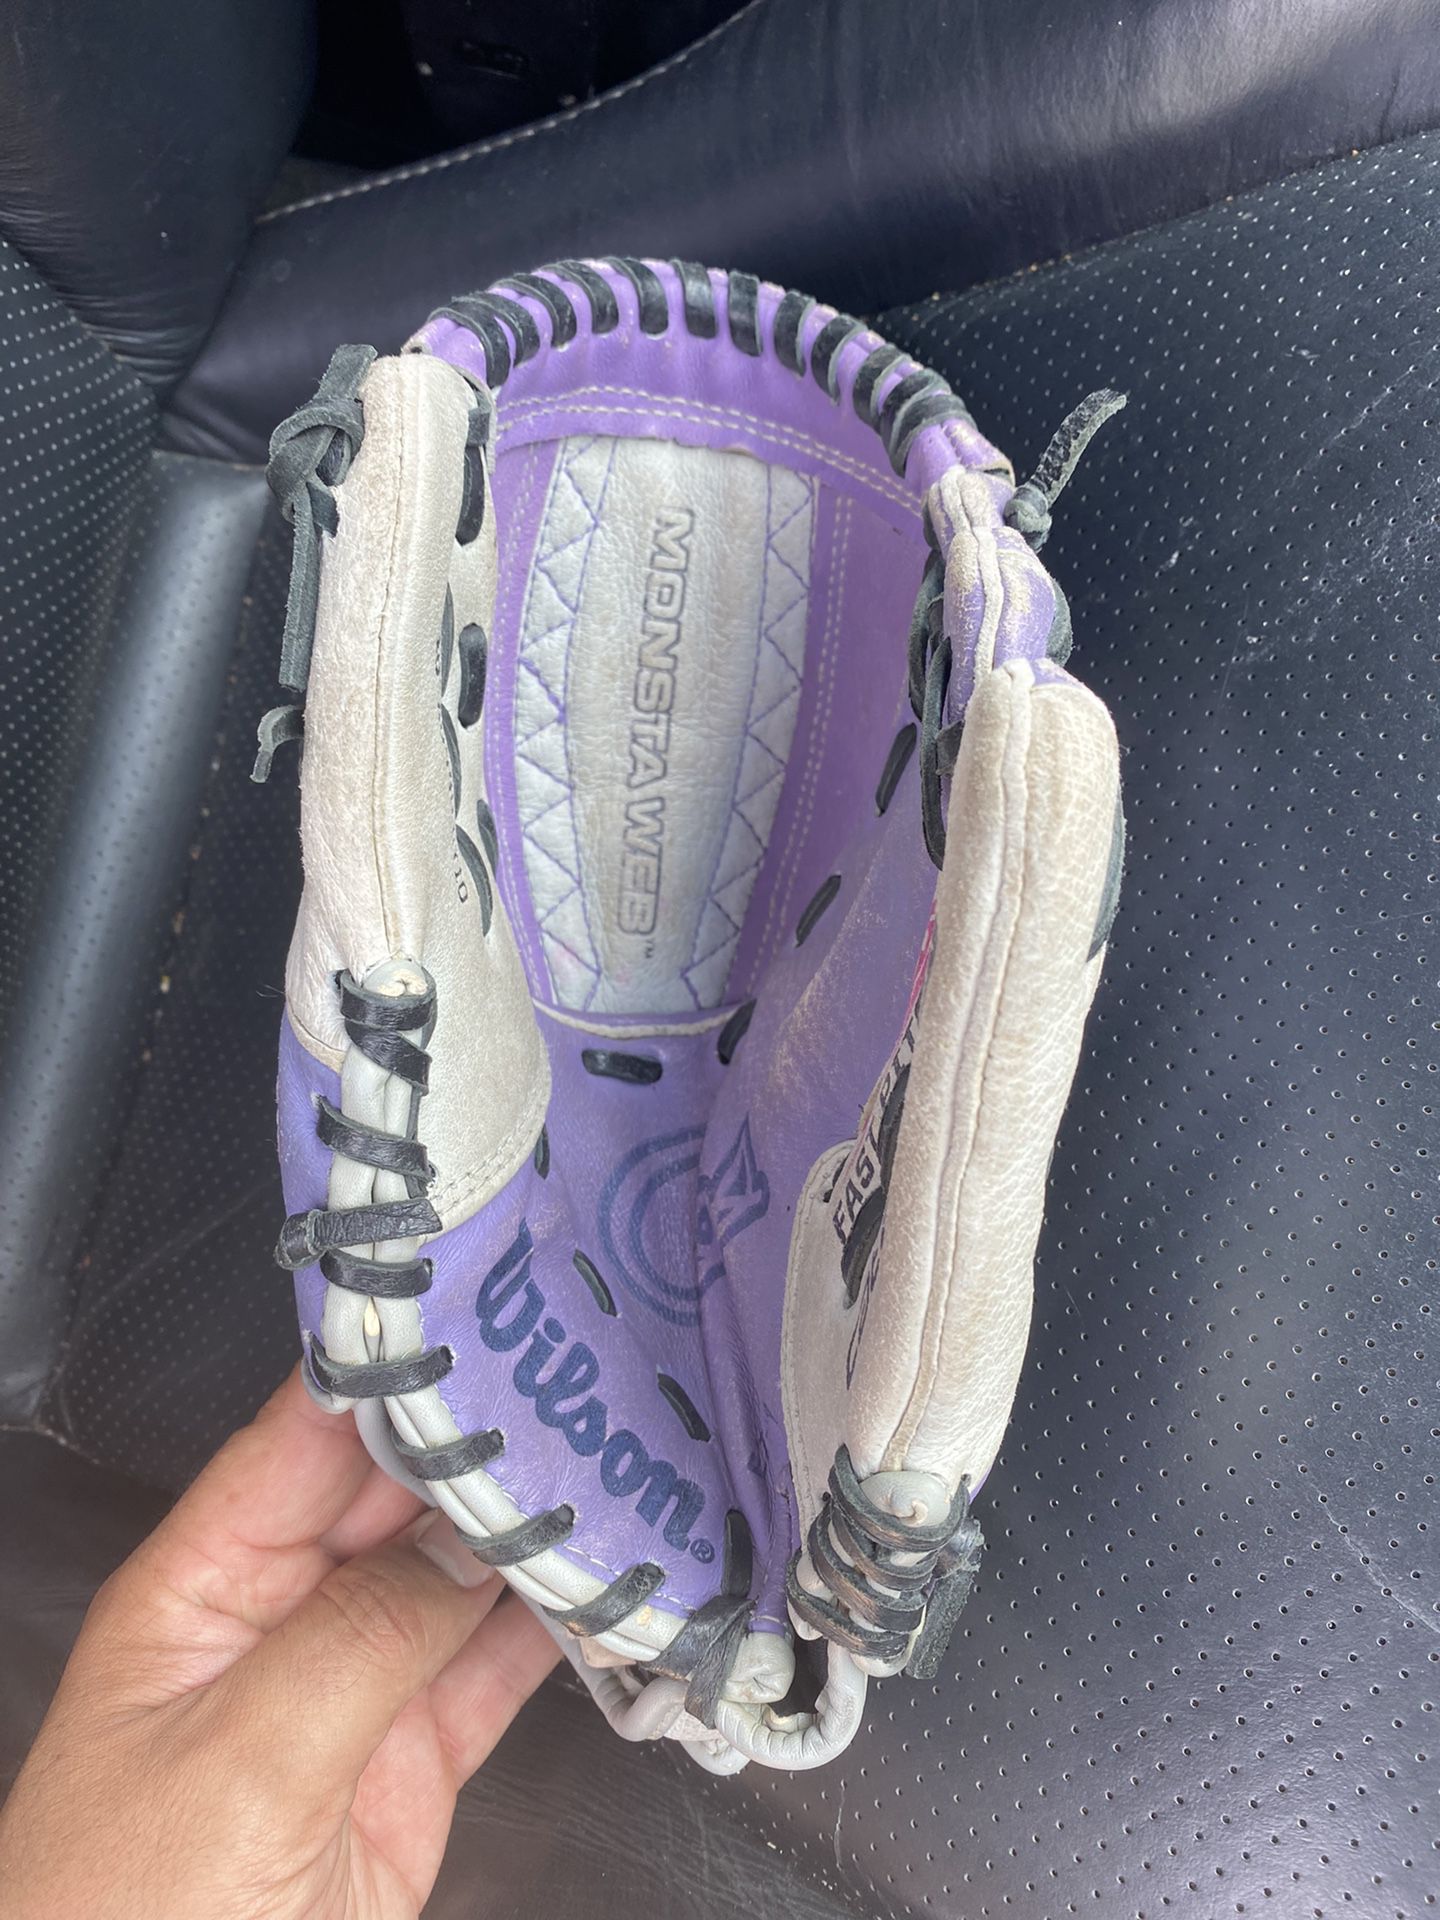 Softball Glove - Wilson 10” $20 OBO 